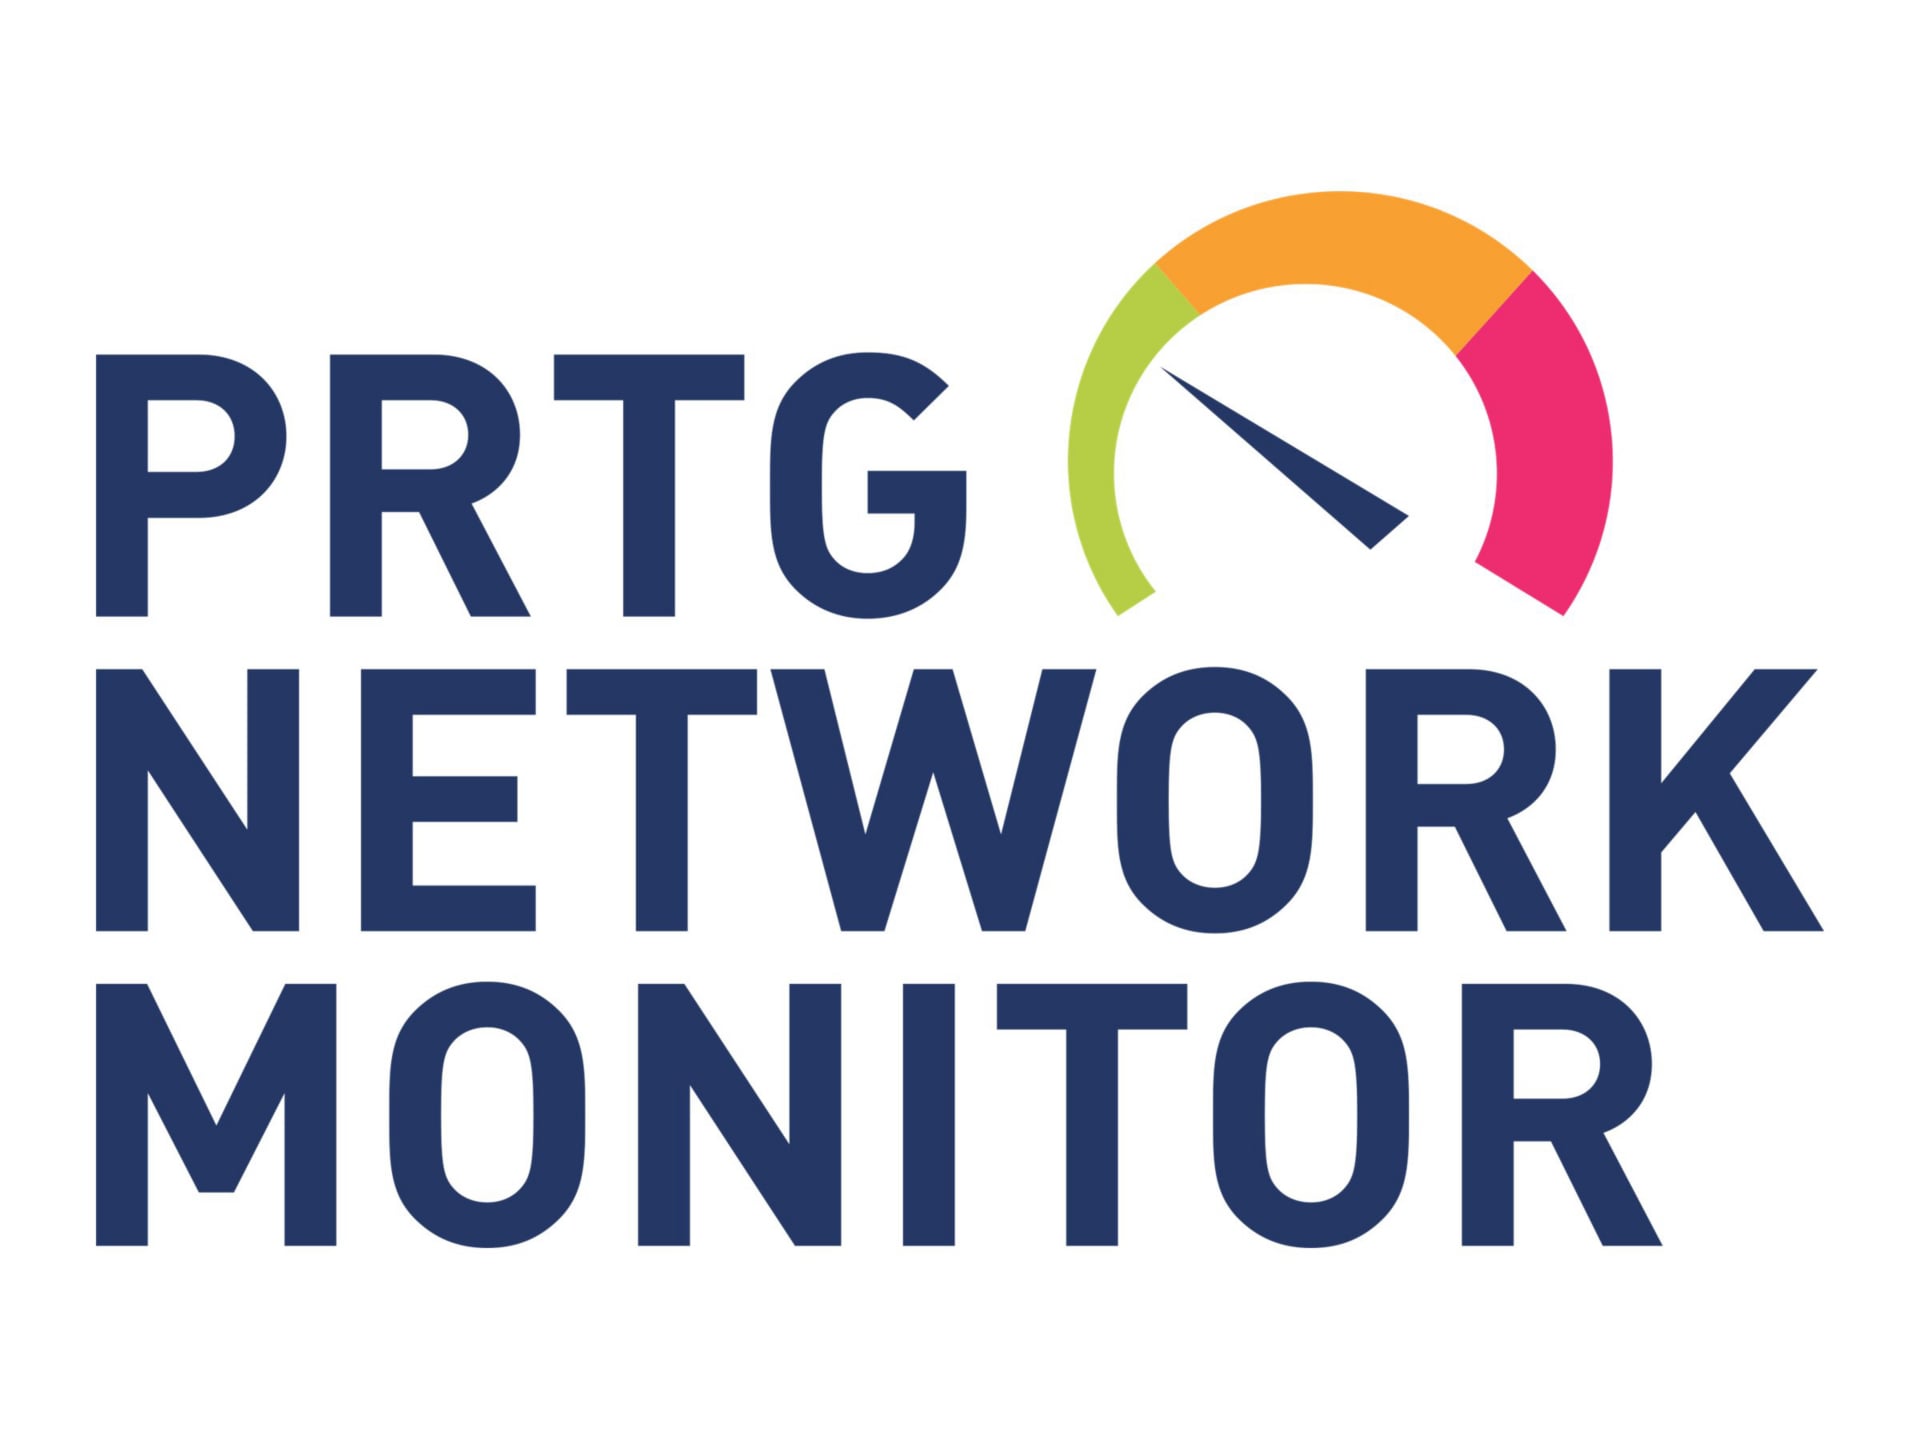 PRTG Network Monitor - upgrade license + 3 Years Maintenance - 5000 sensors